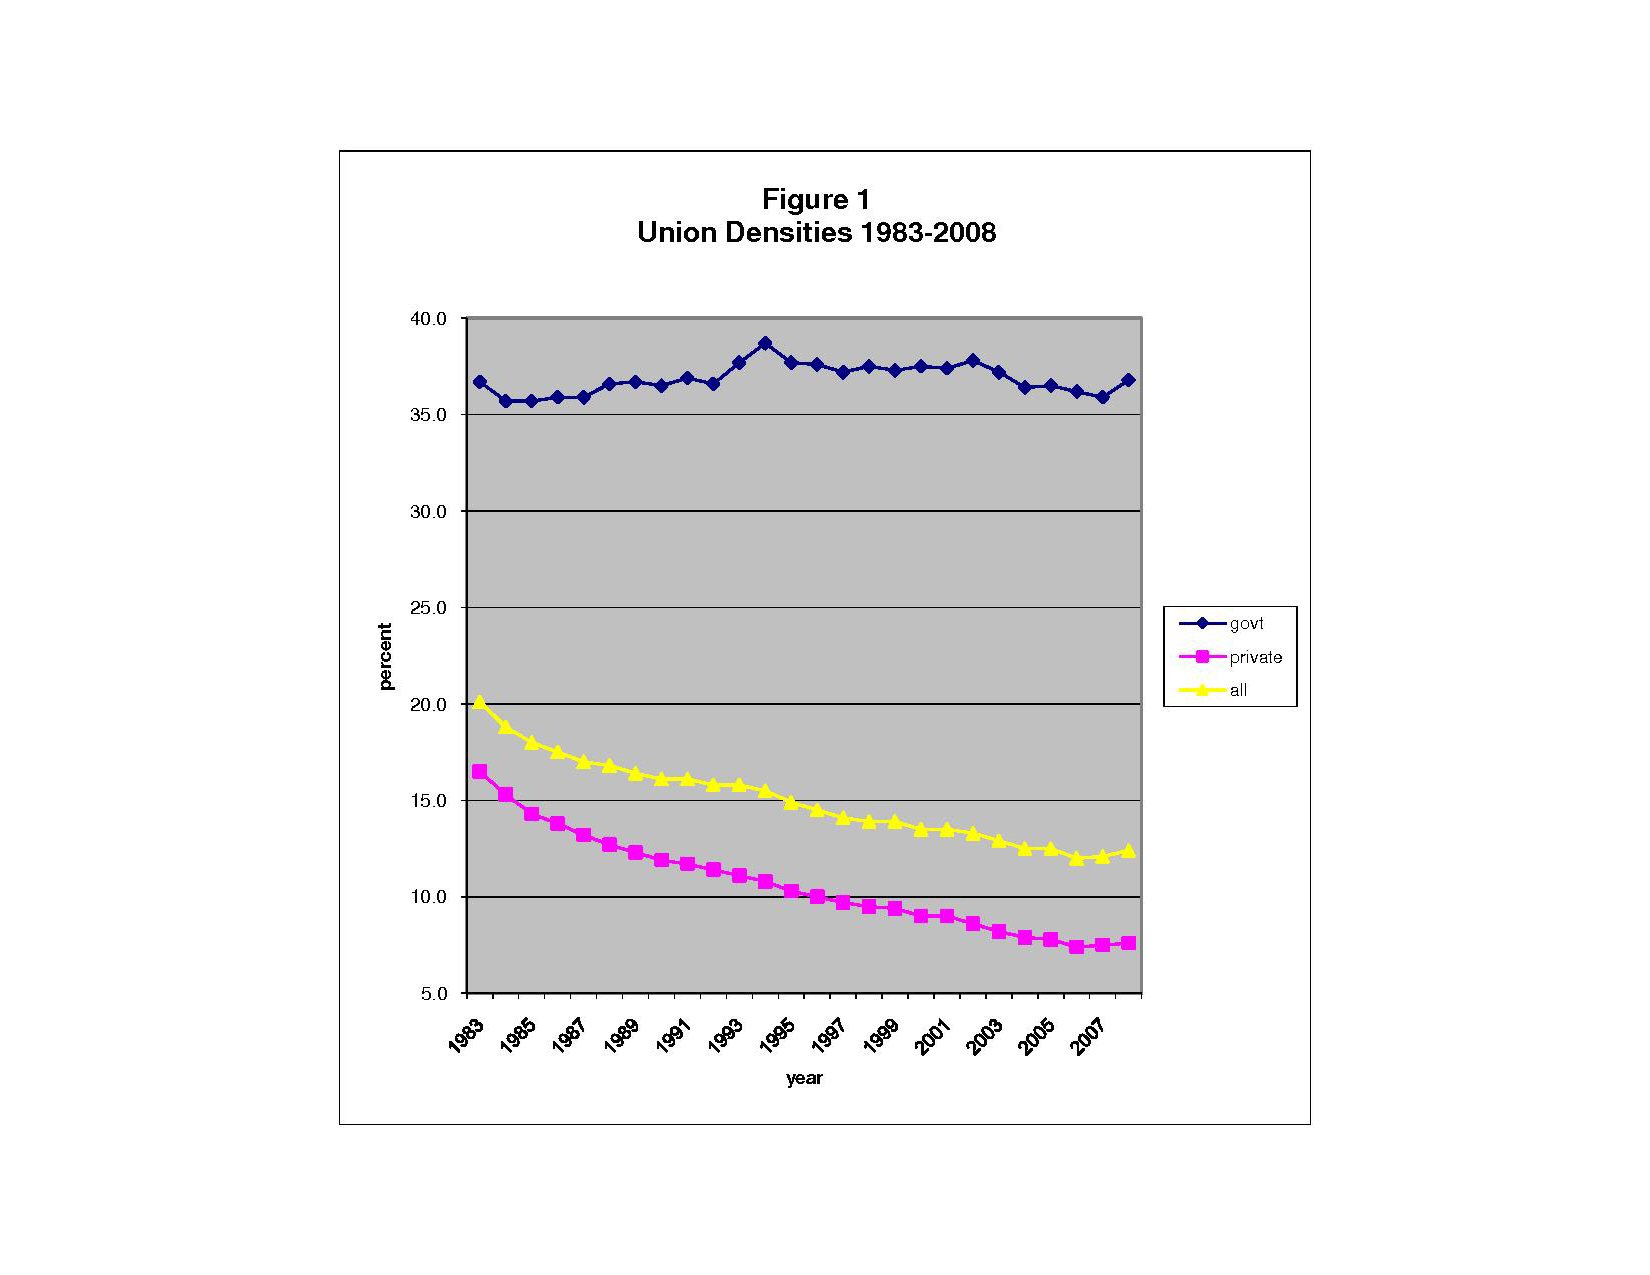 Figure 1. Union Densities, 1983-2008